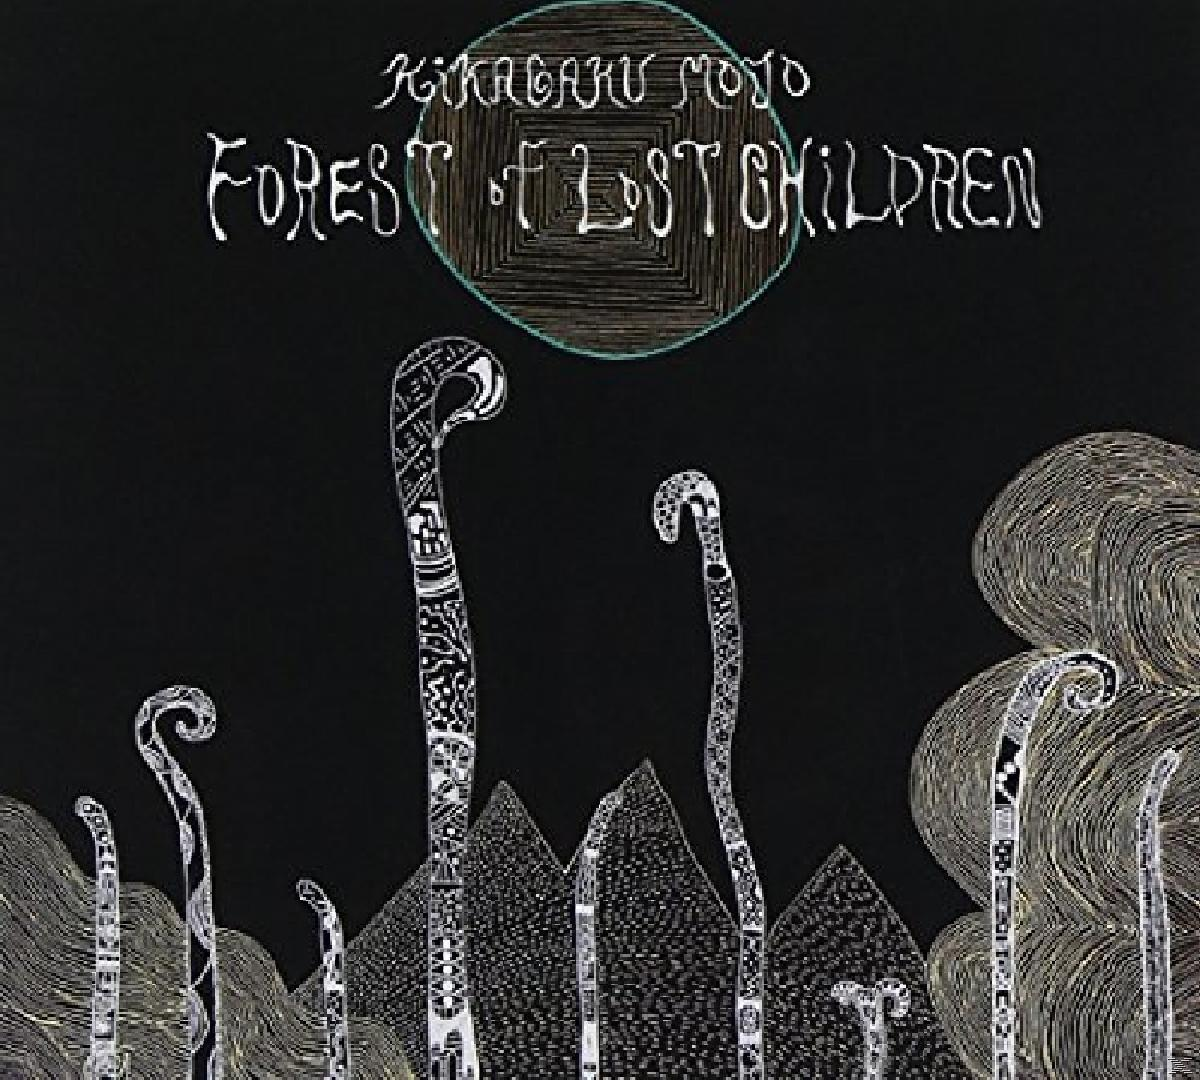 Kikagaku Moyo - Lost Children - Forest (CD) of